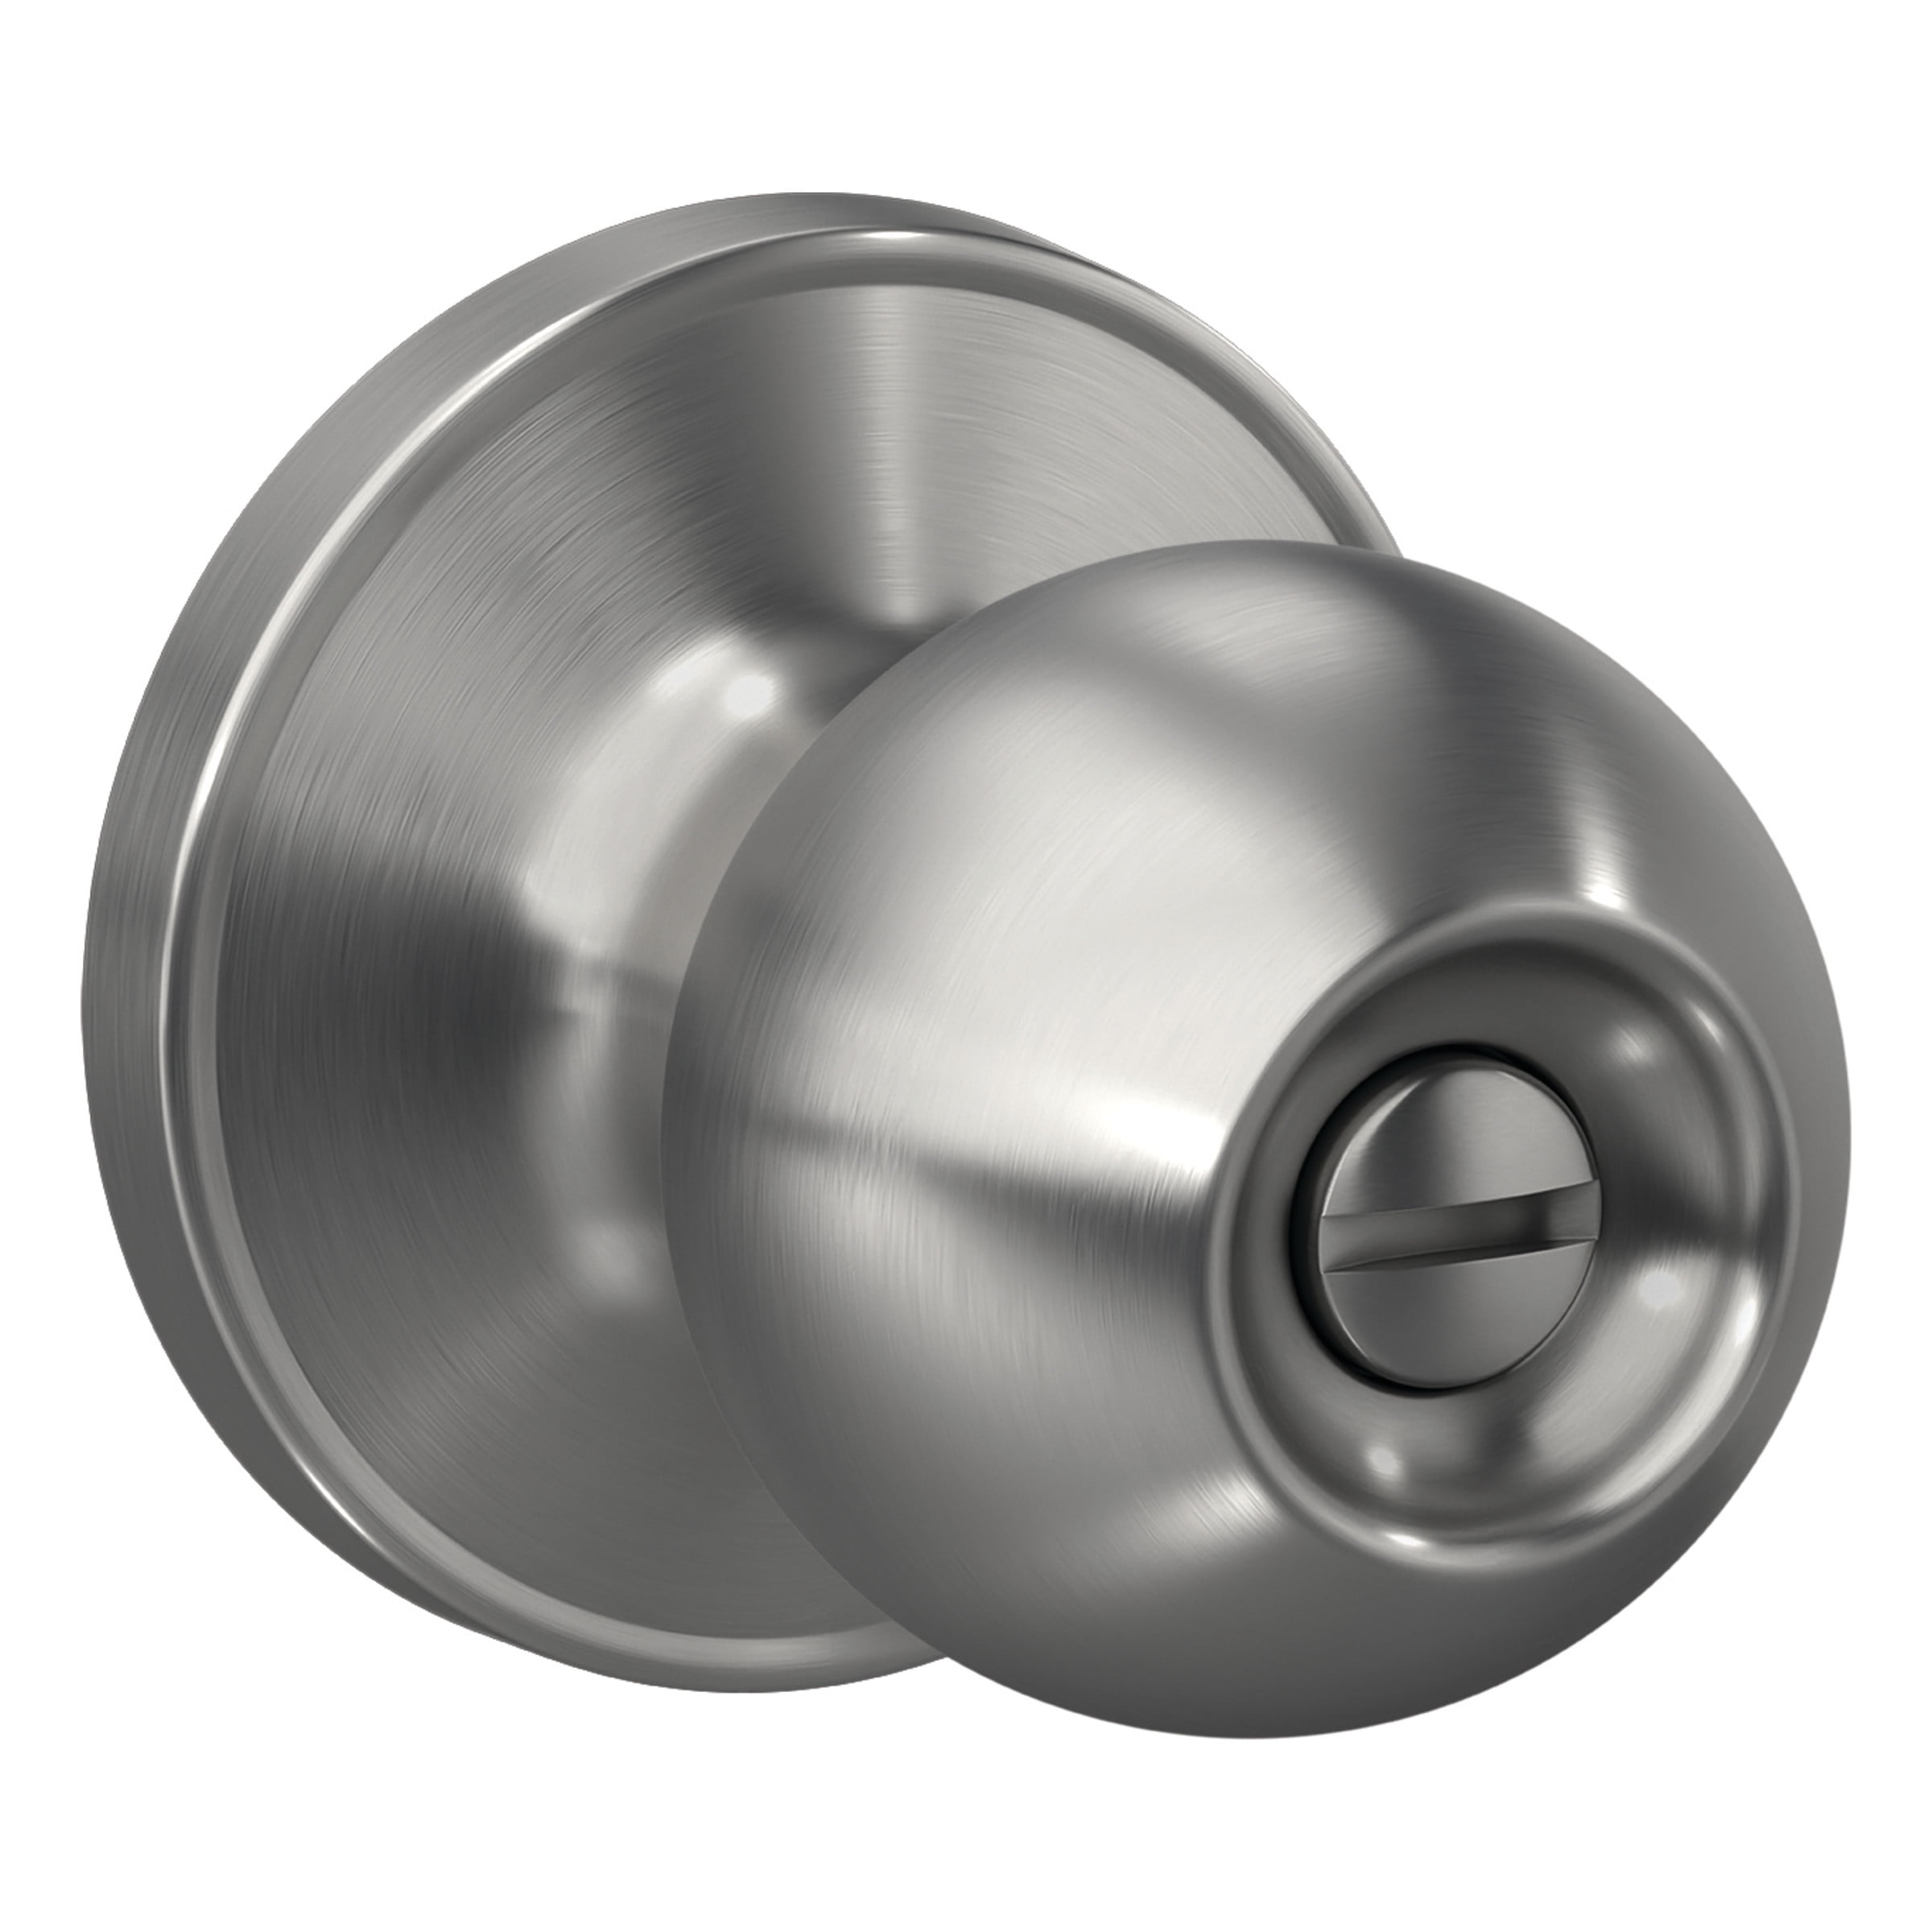 Interior Privacy Door High-grade Stainless Steel Thicker Knob Handle Locks Set 